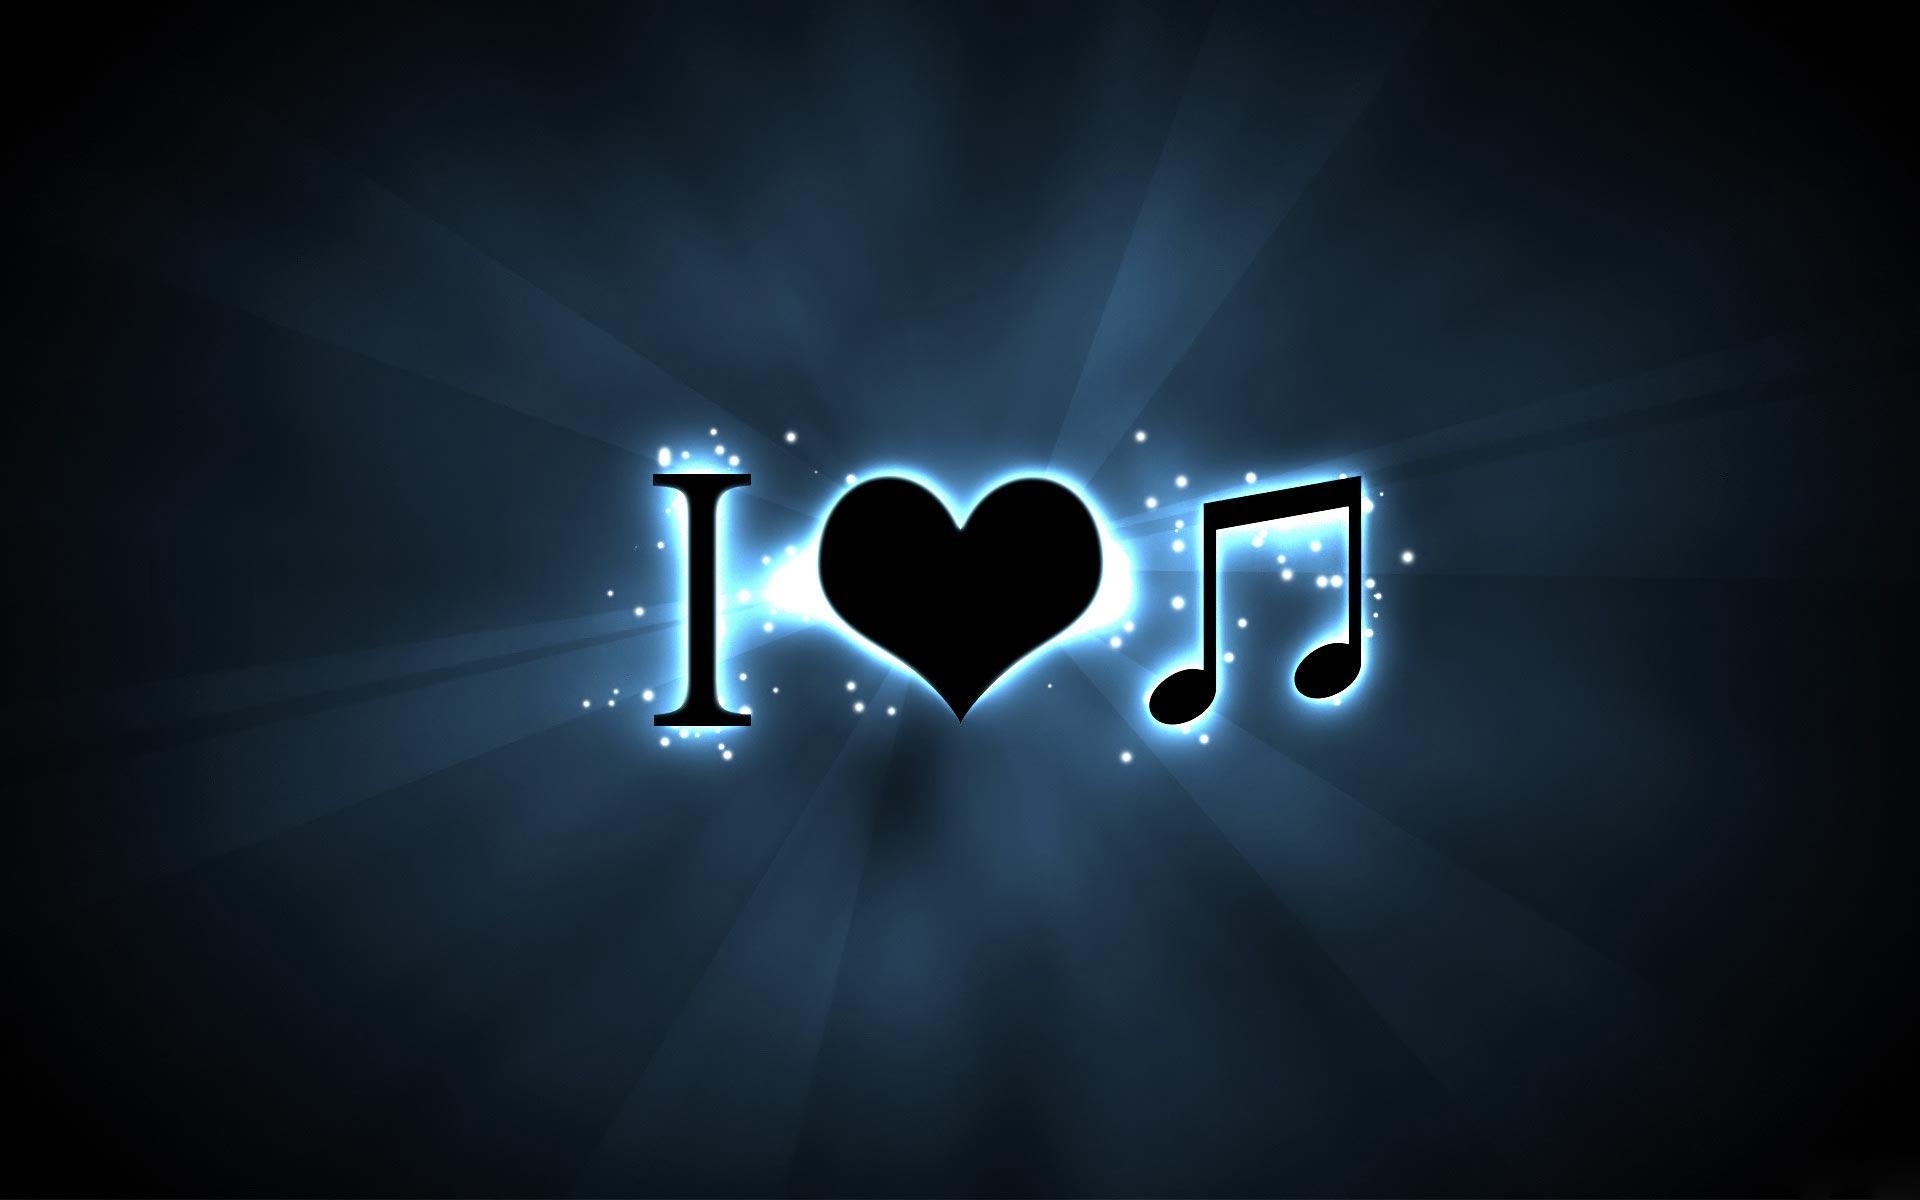 Musical love